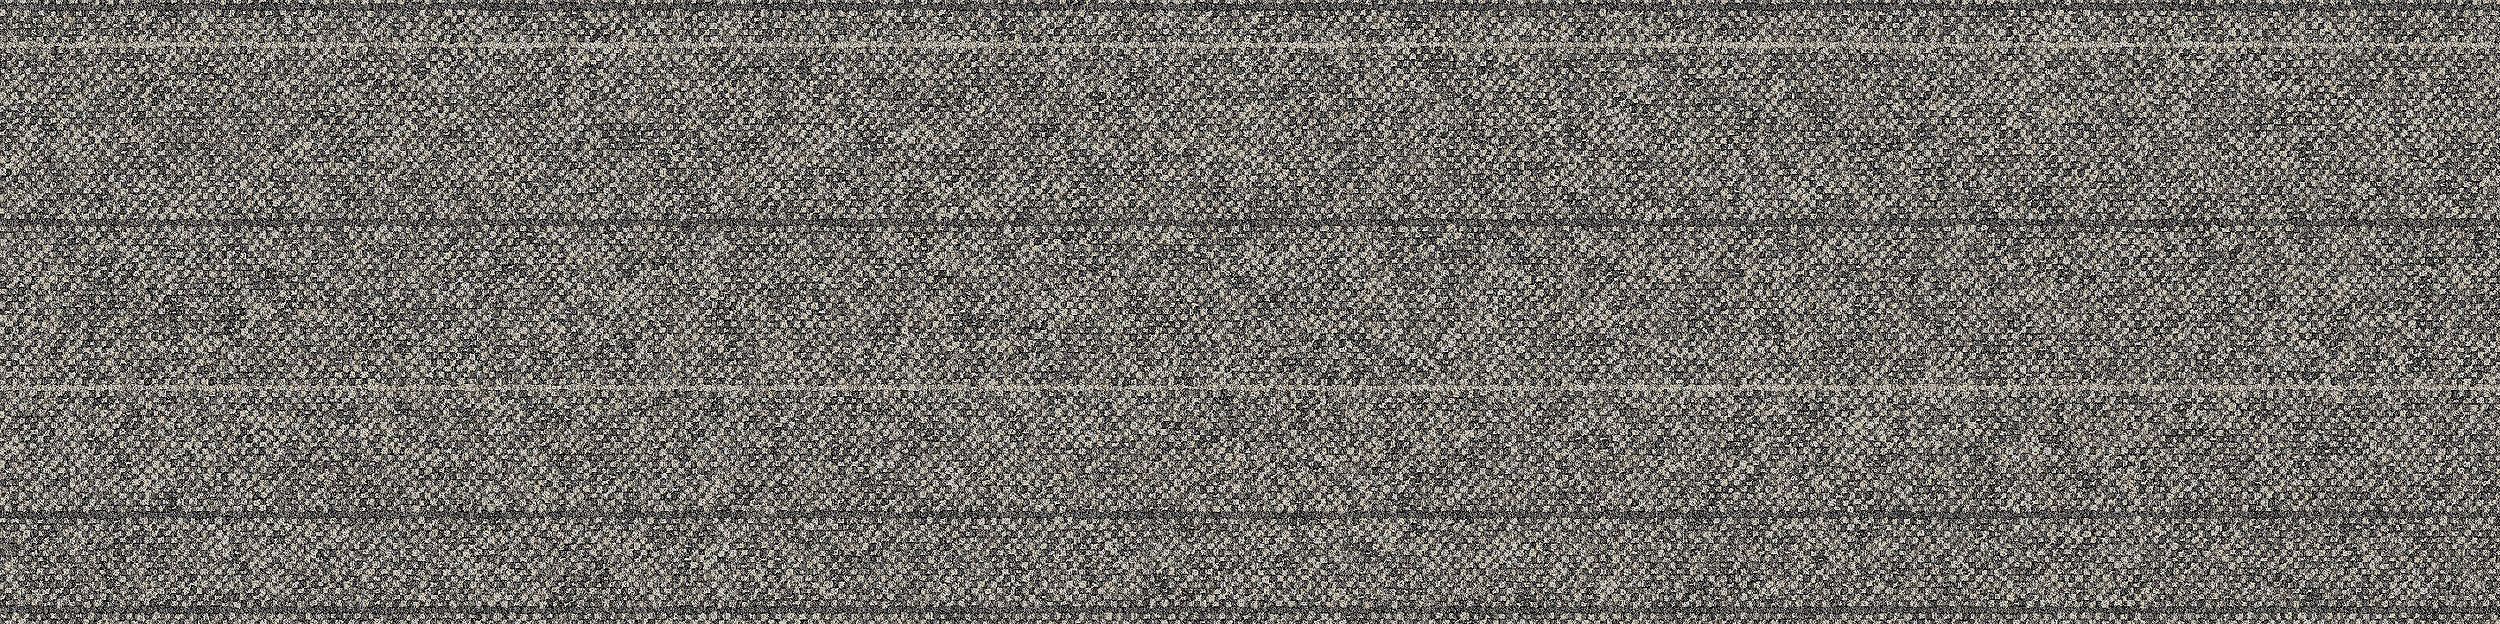 WW860 Carpet Tile In Natural Tweed image number 13